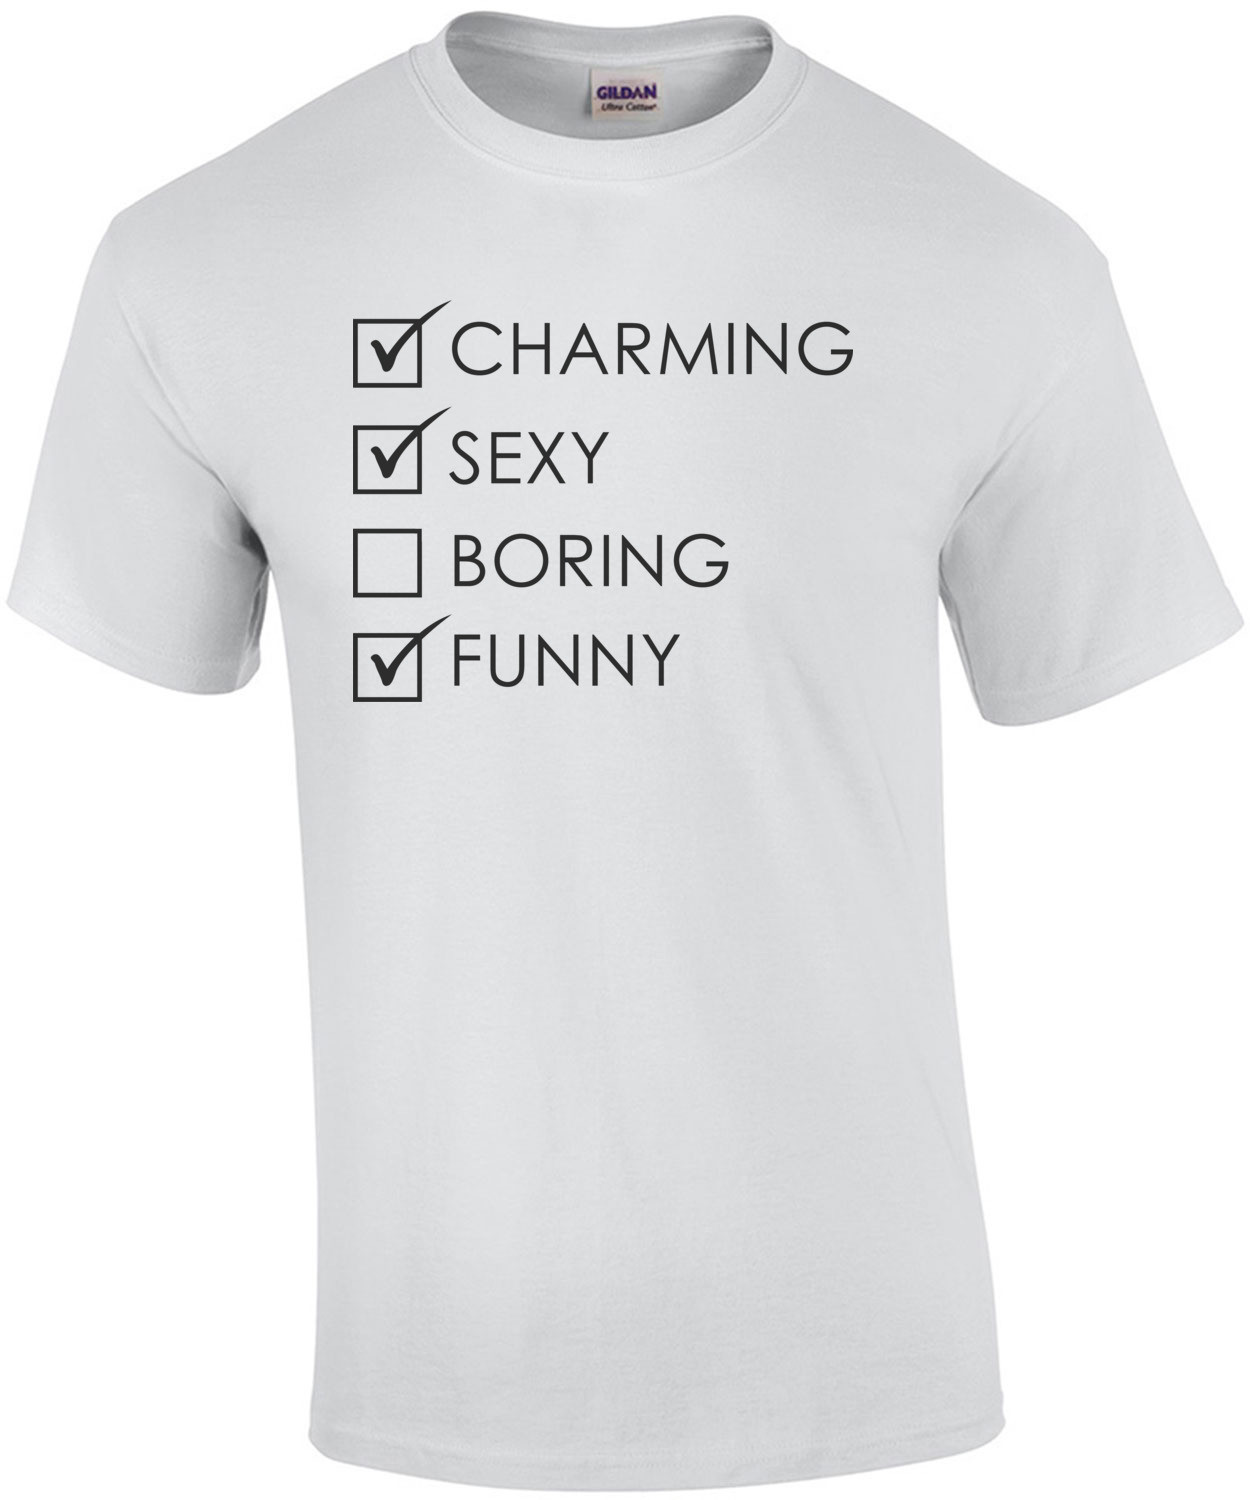 Charming Sexy Boring Funny - Funny T-Shirt